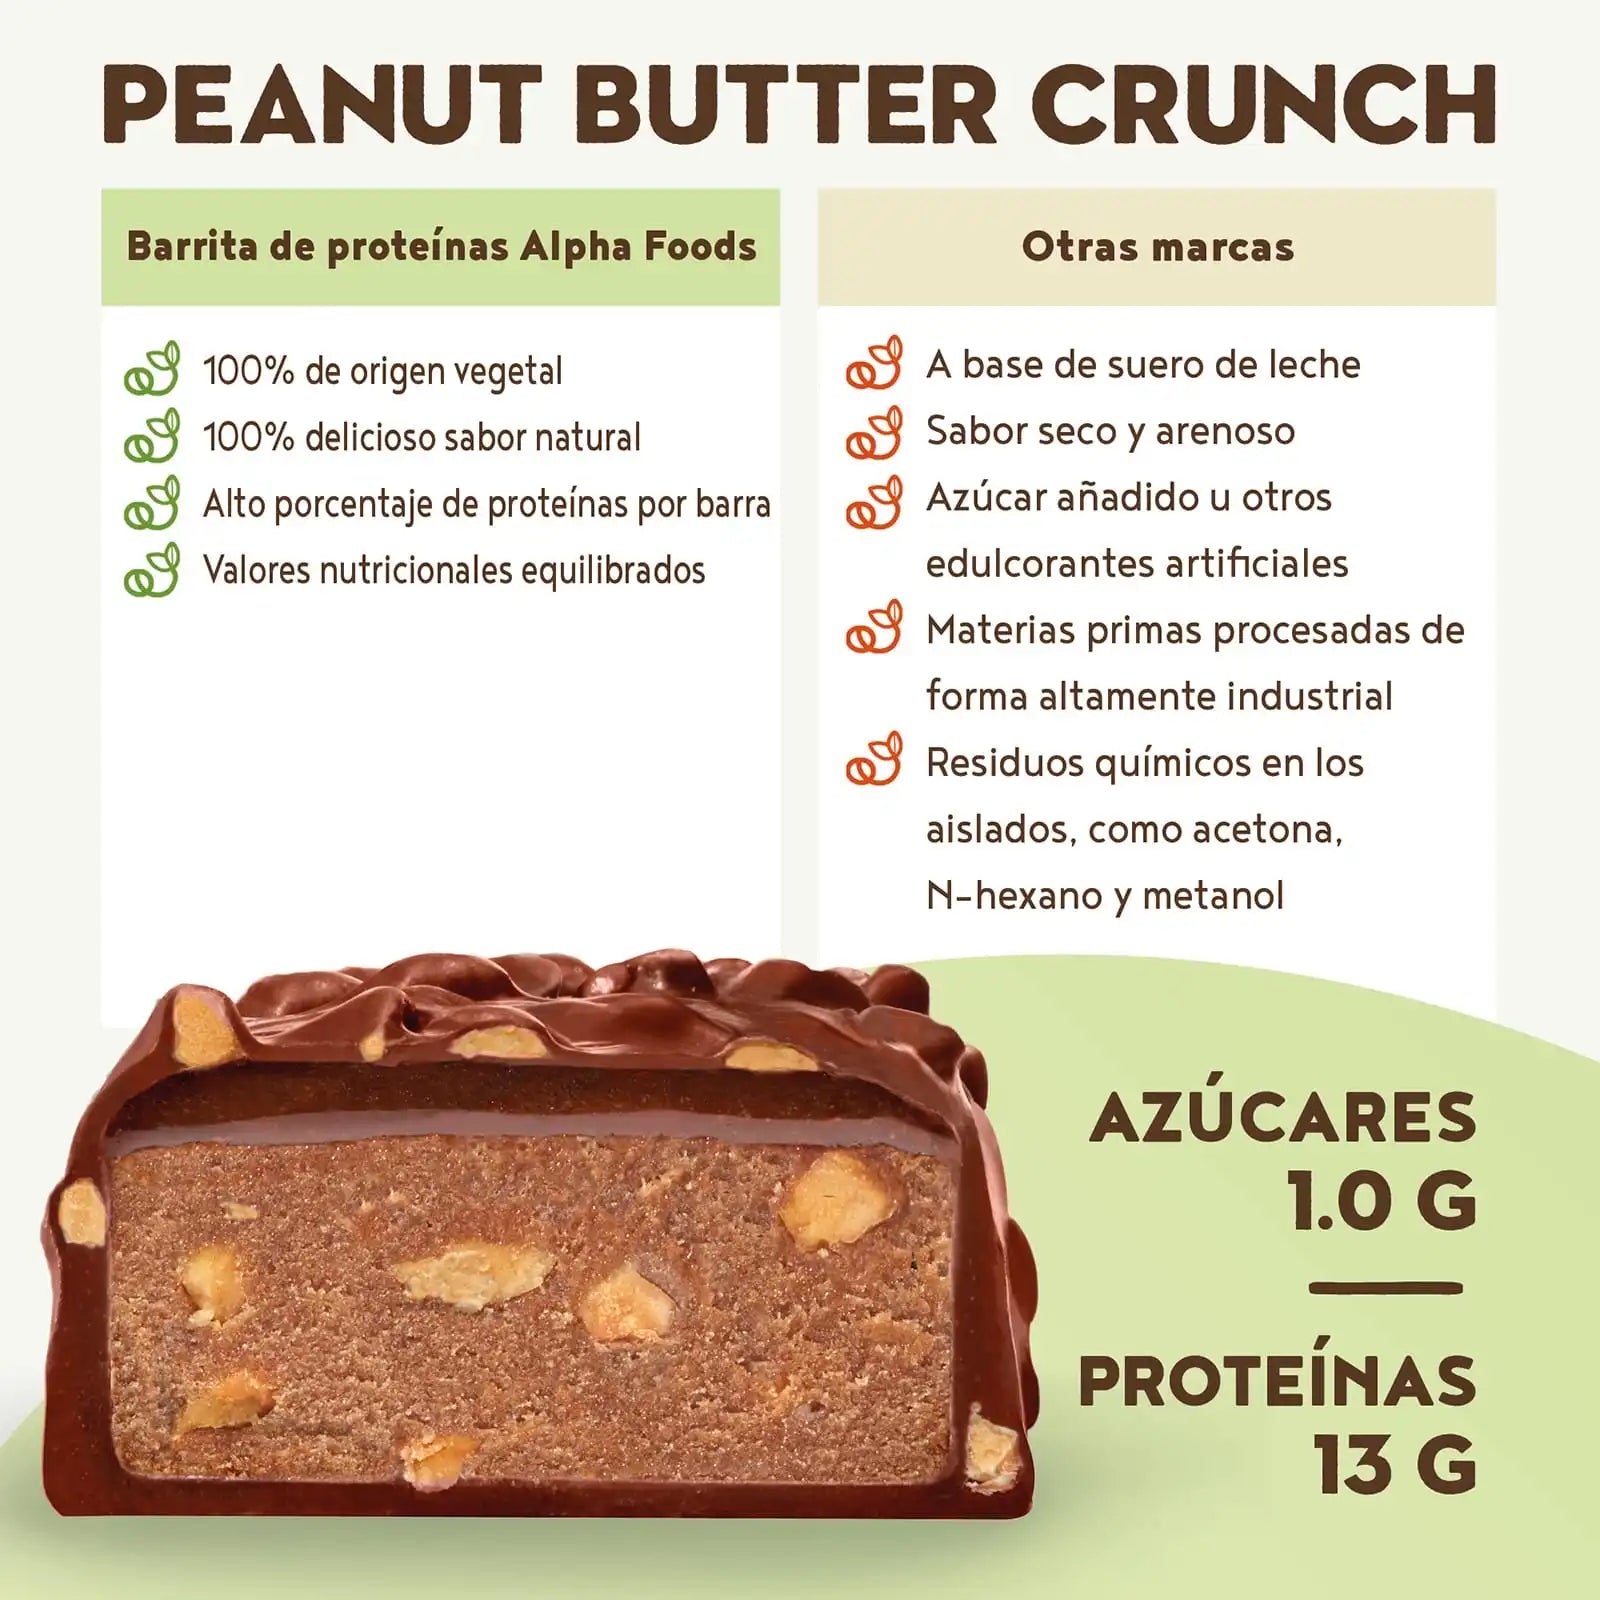 A+ Two - Barritas de proteínas - Peanut Butter Crunch